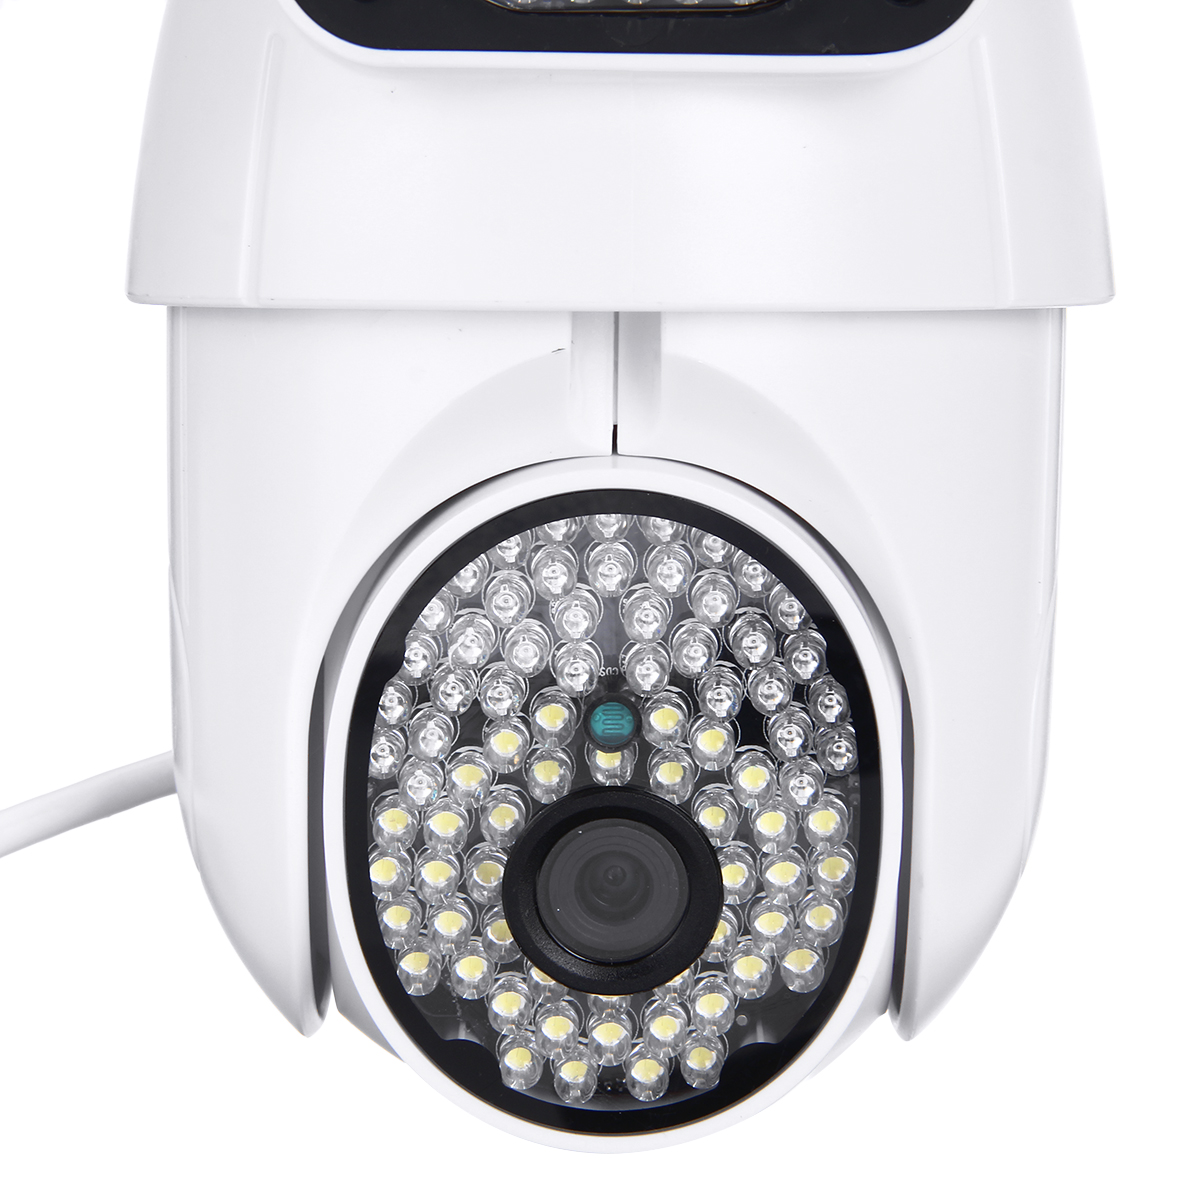 HD 1080P Security IR Camera WiFi Wireless Outdoor Home Waterproof Smart IP CCTV Camera—8